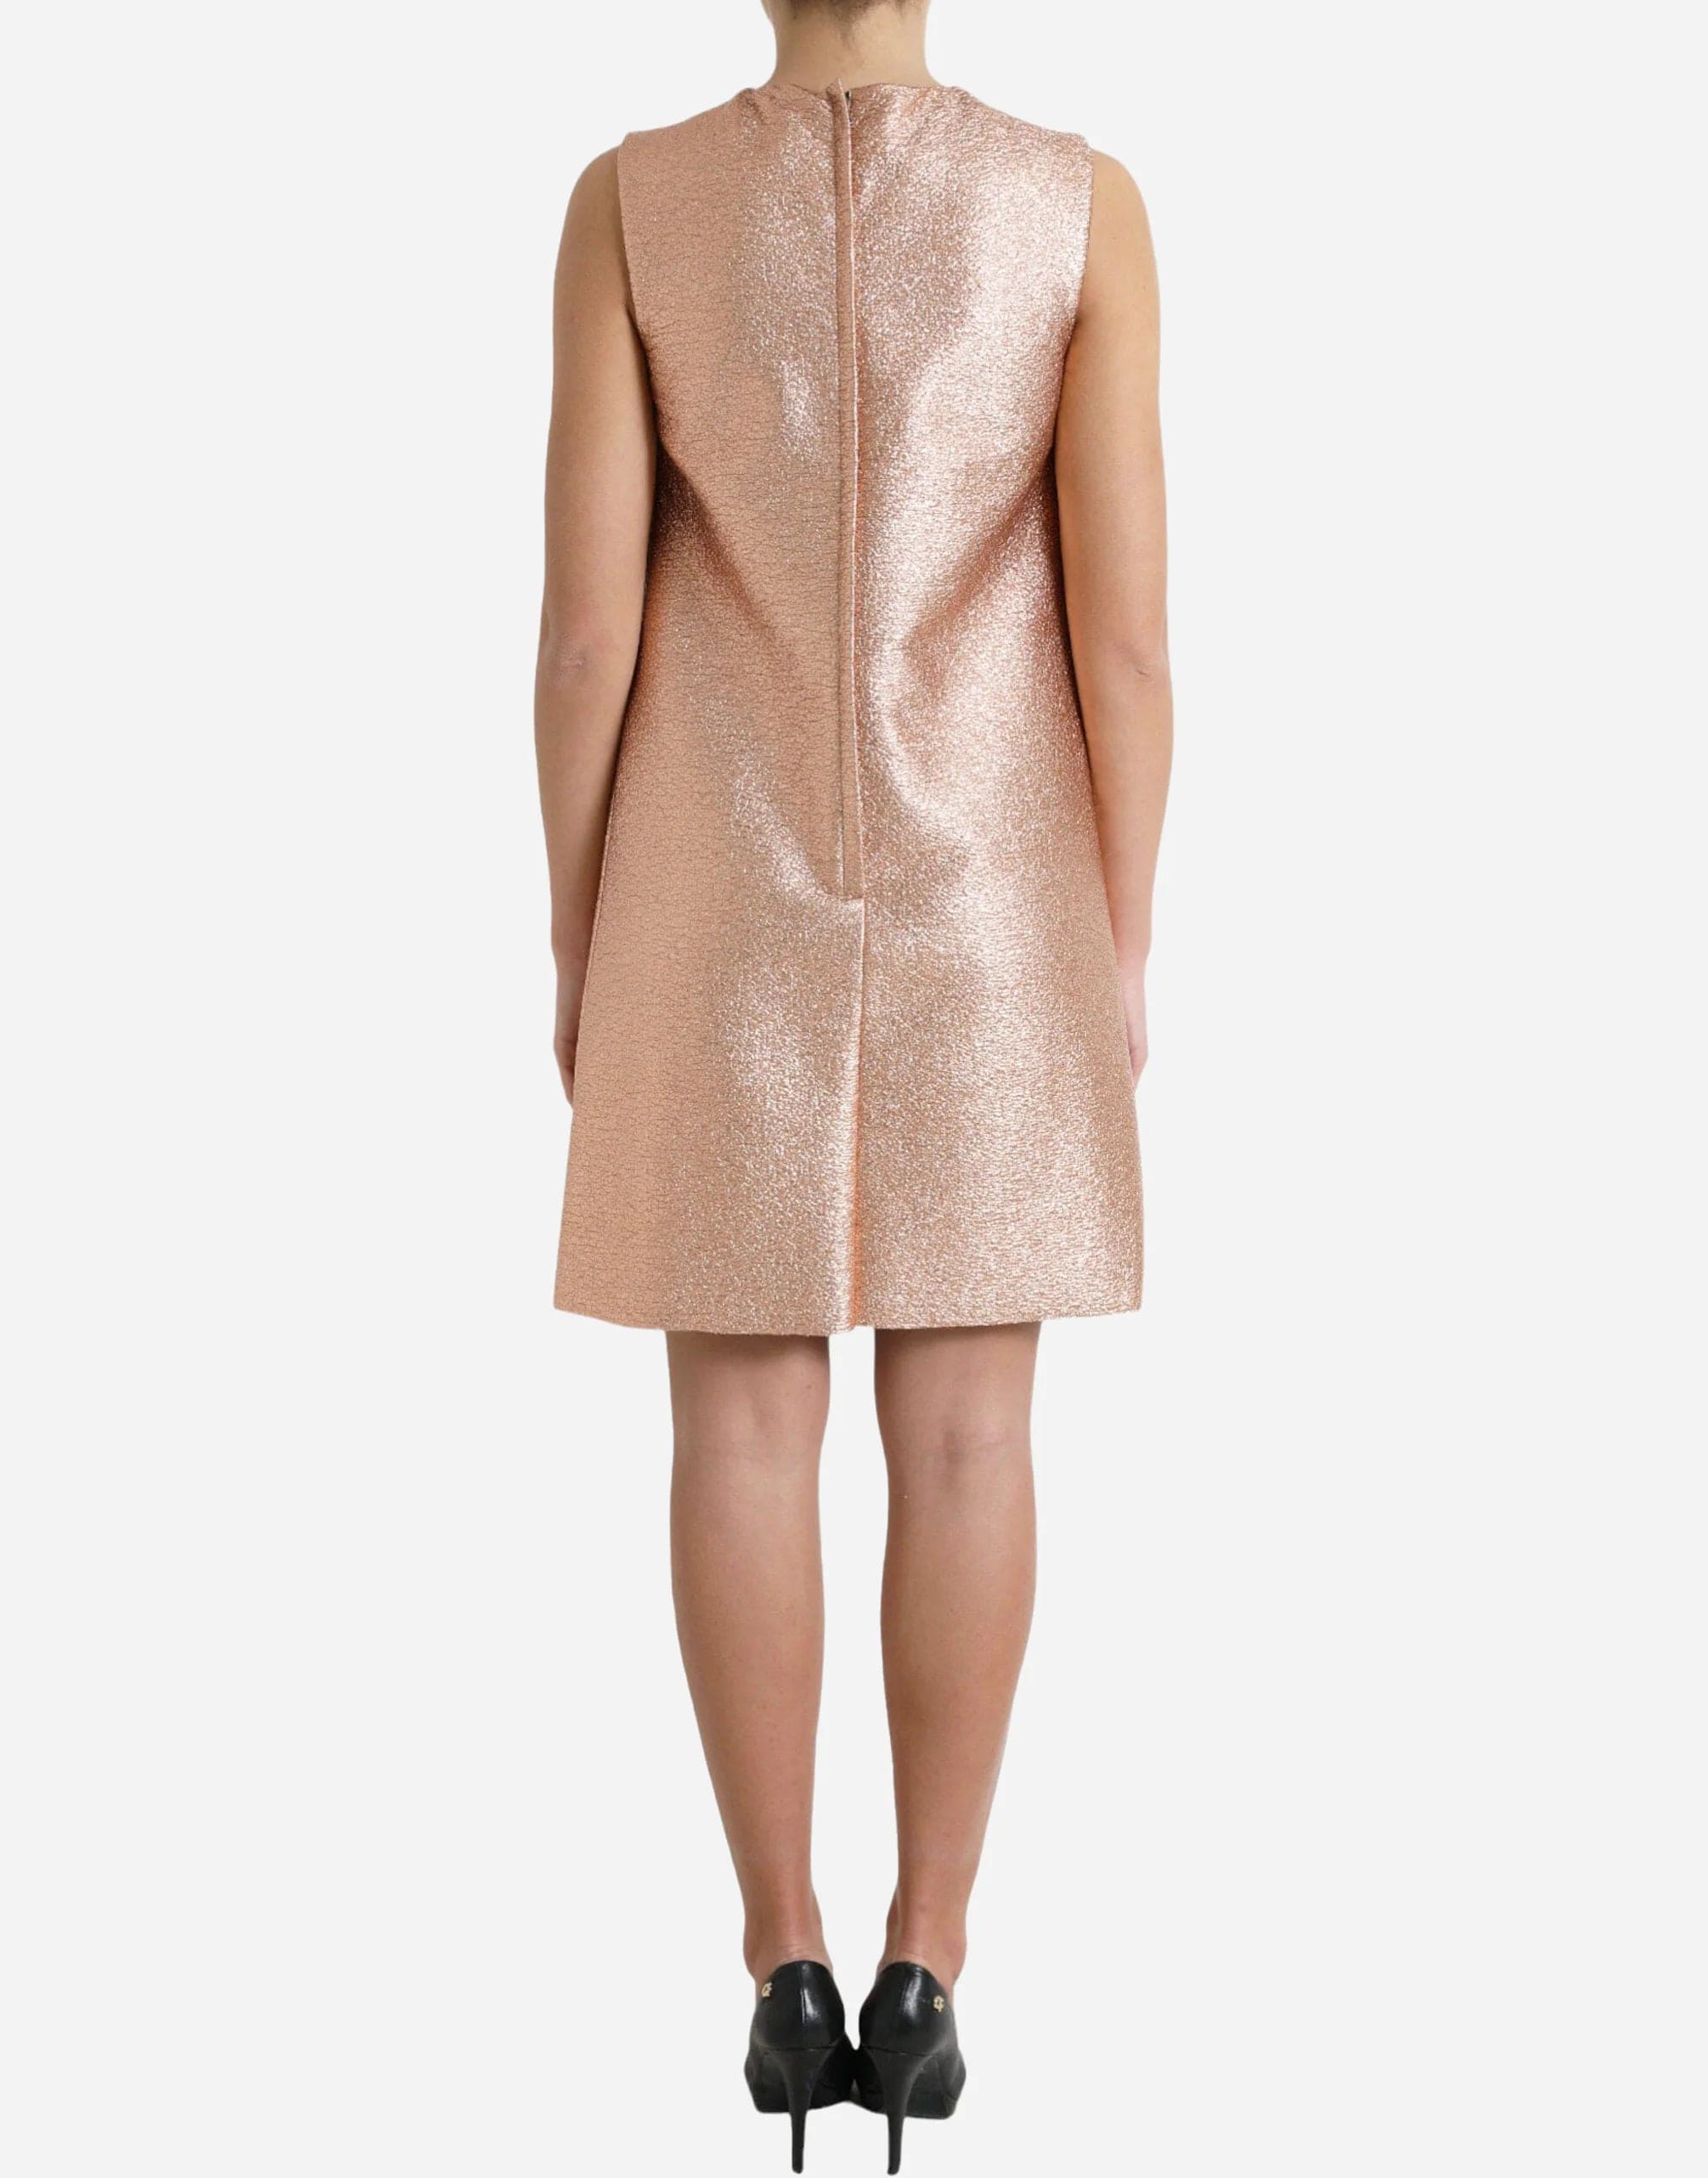 Dolce & Gabbana Jacquard Sleeveless Mini Dress